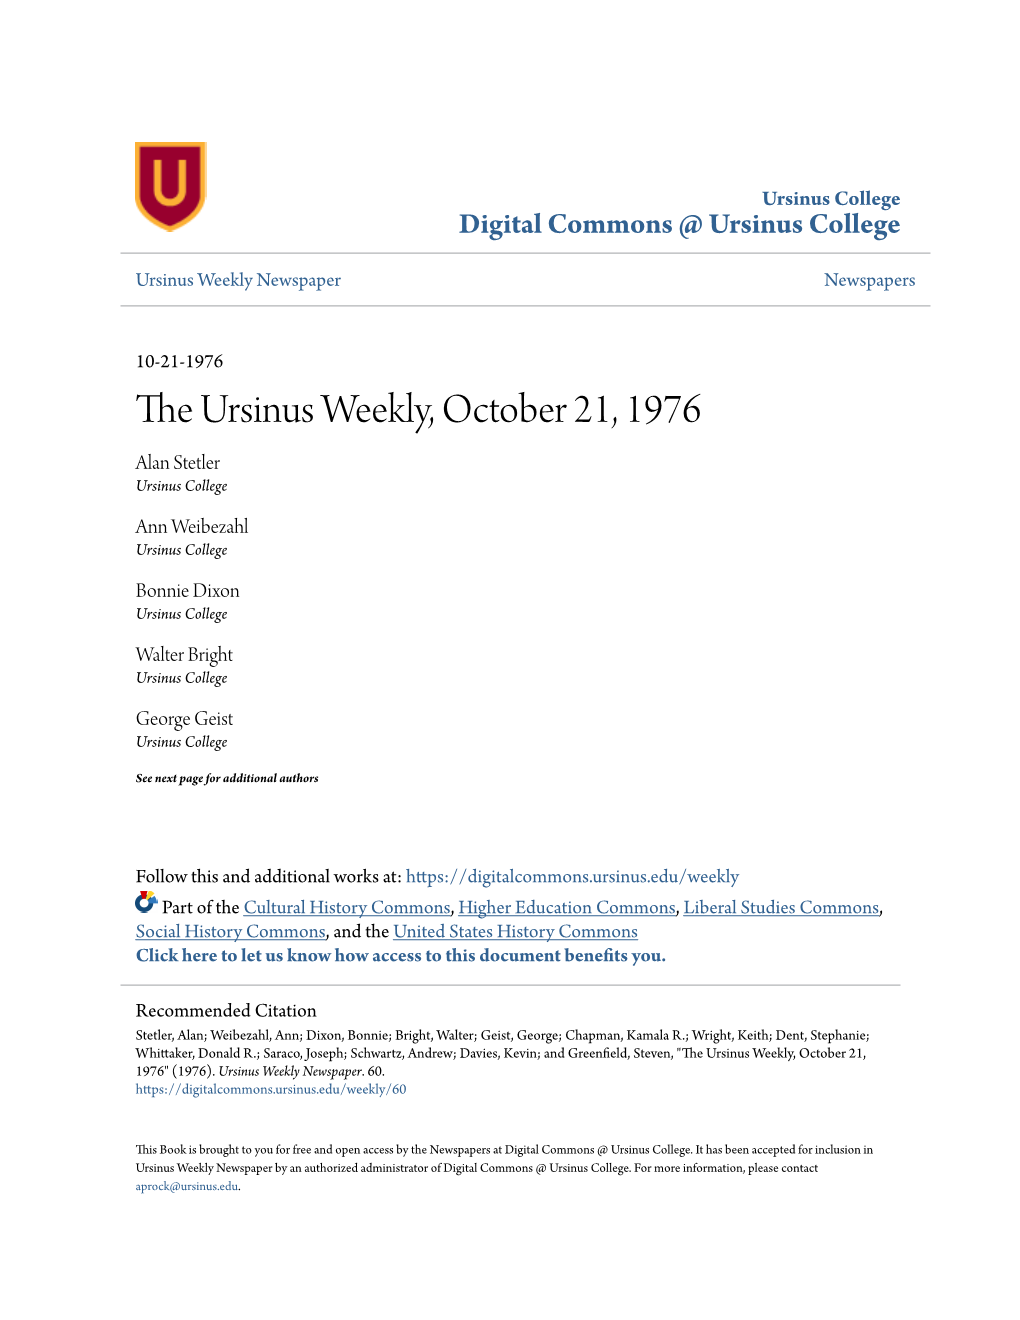 The Ursinus Weekly, October 21, 1976